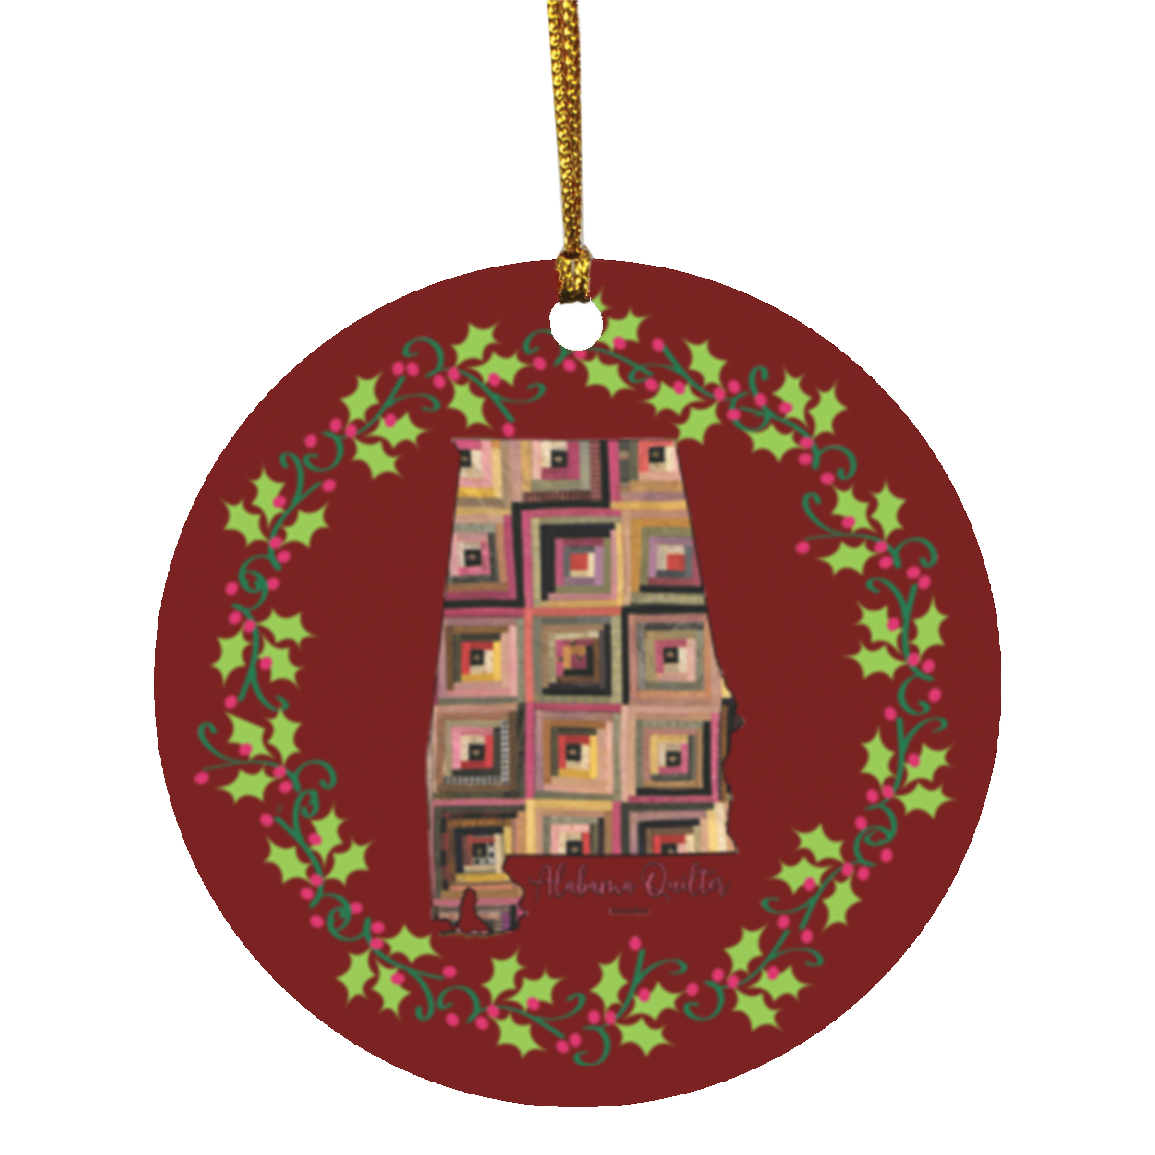 Alabama Quilter Christmas Circle Ornament